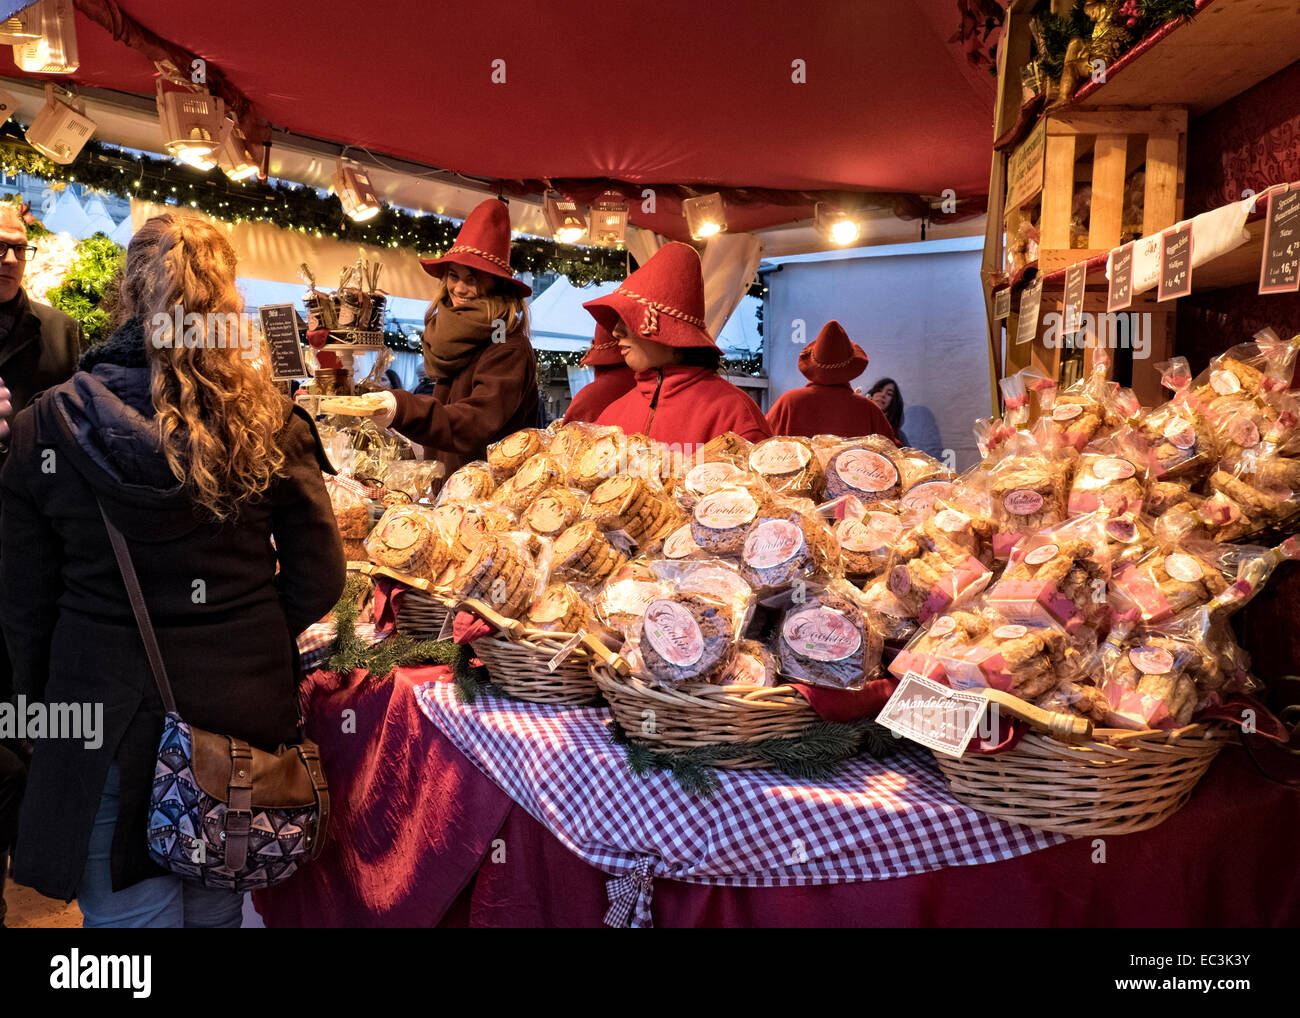 Christmas market at Gendarmenmarkt, Berlin, Germany 2014 - booth selling cookies Stock Photo